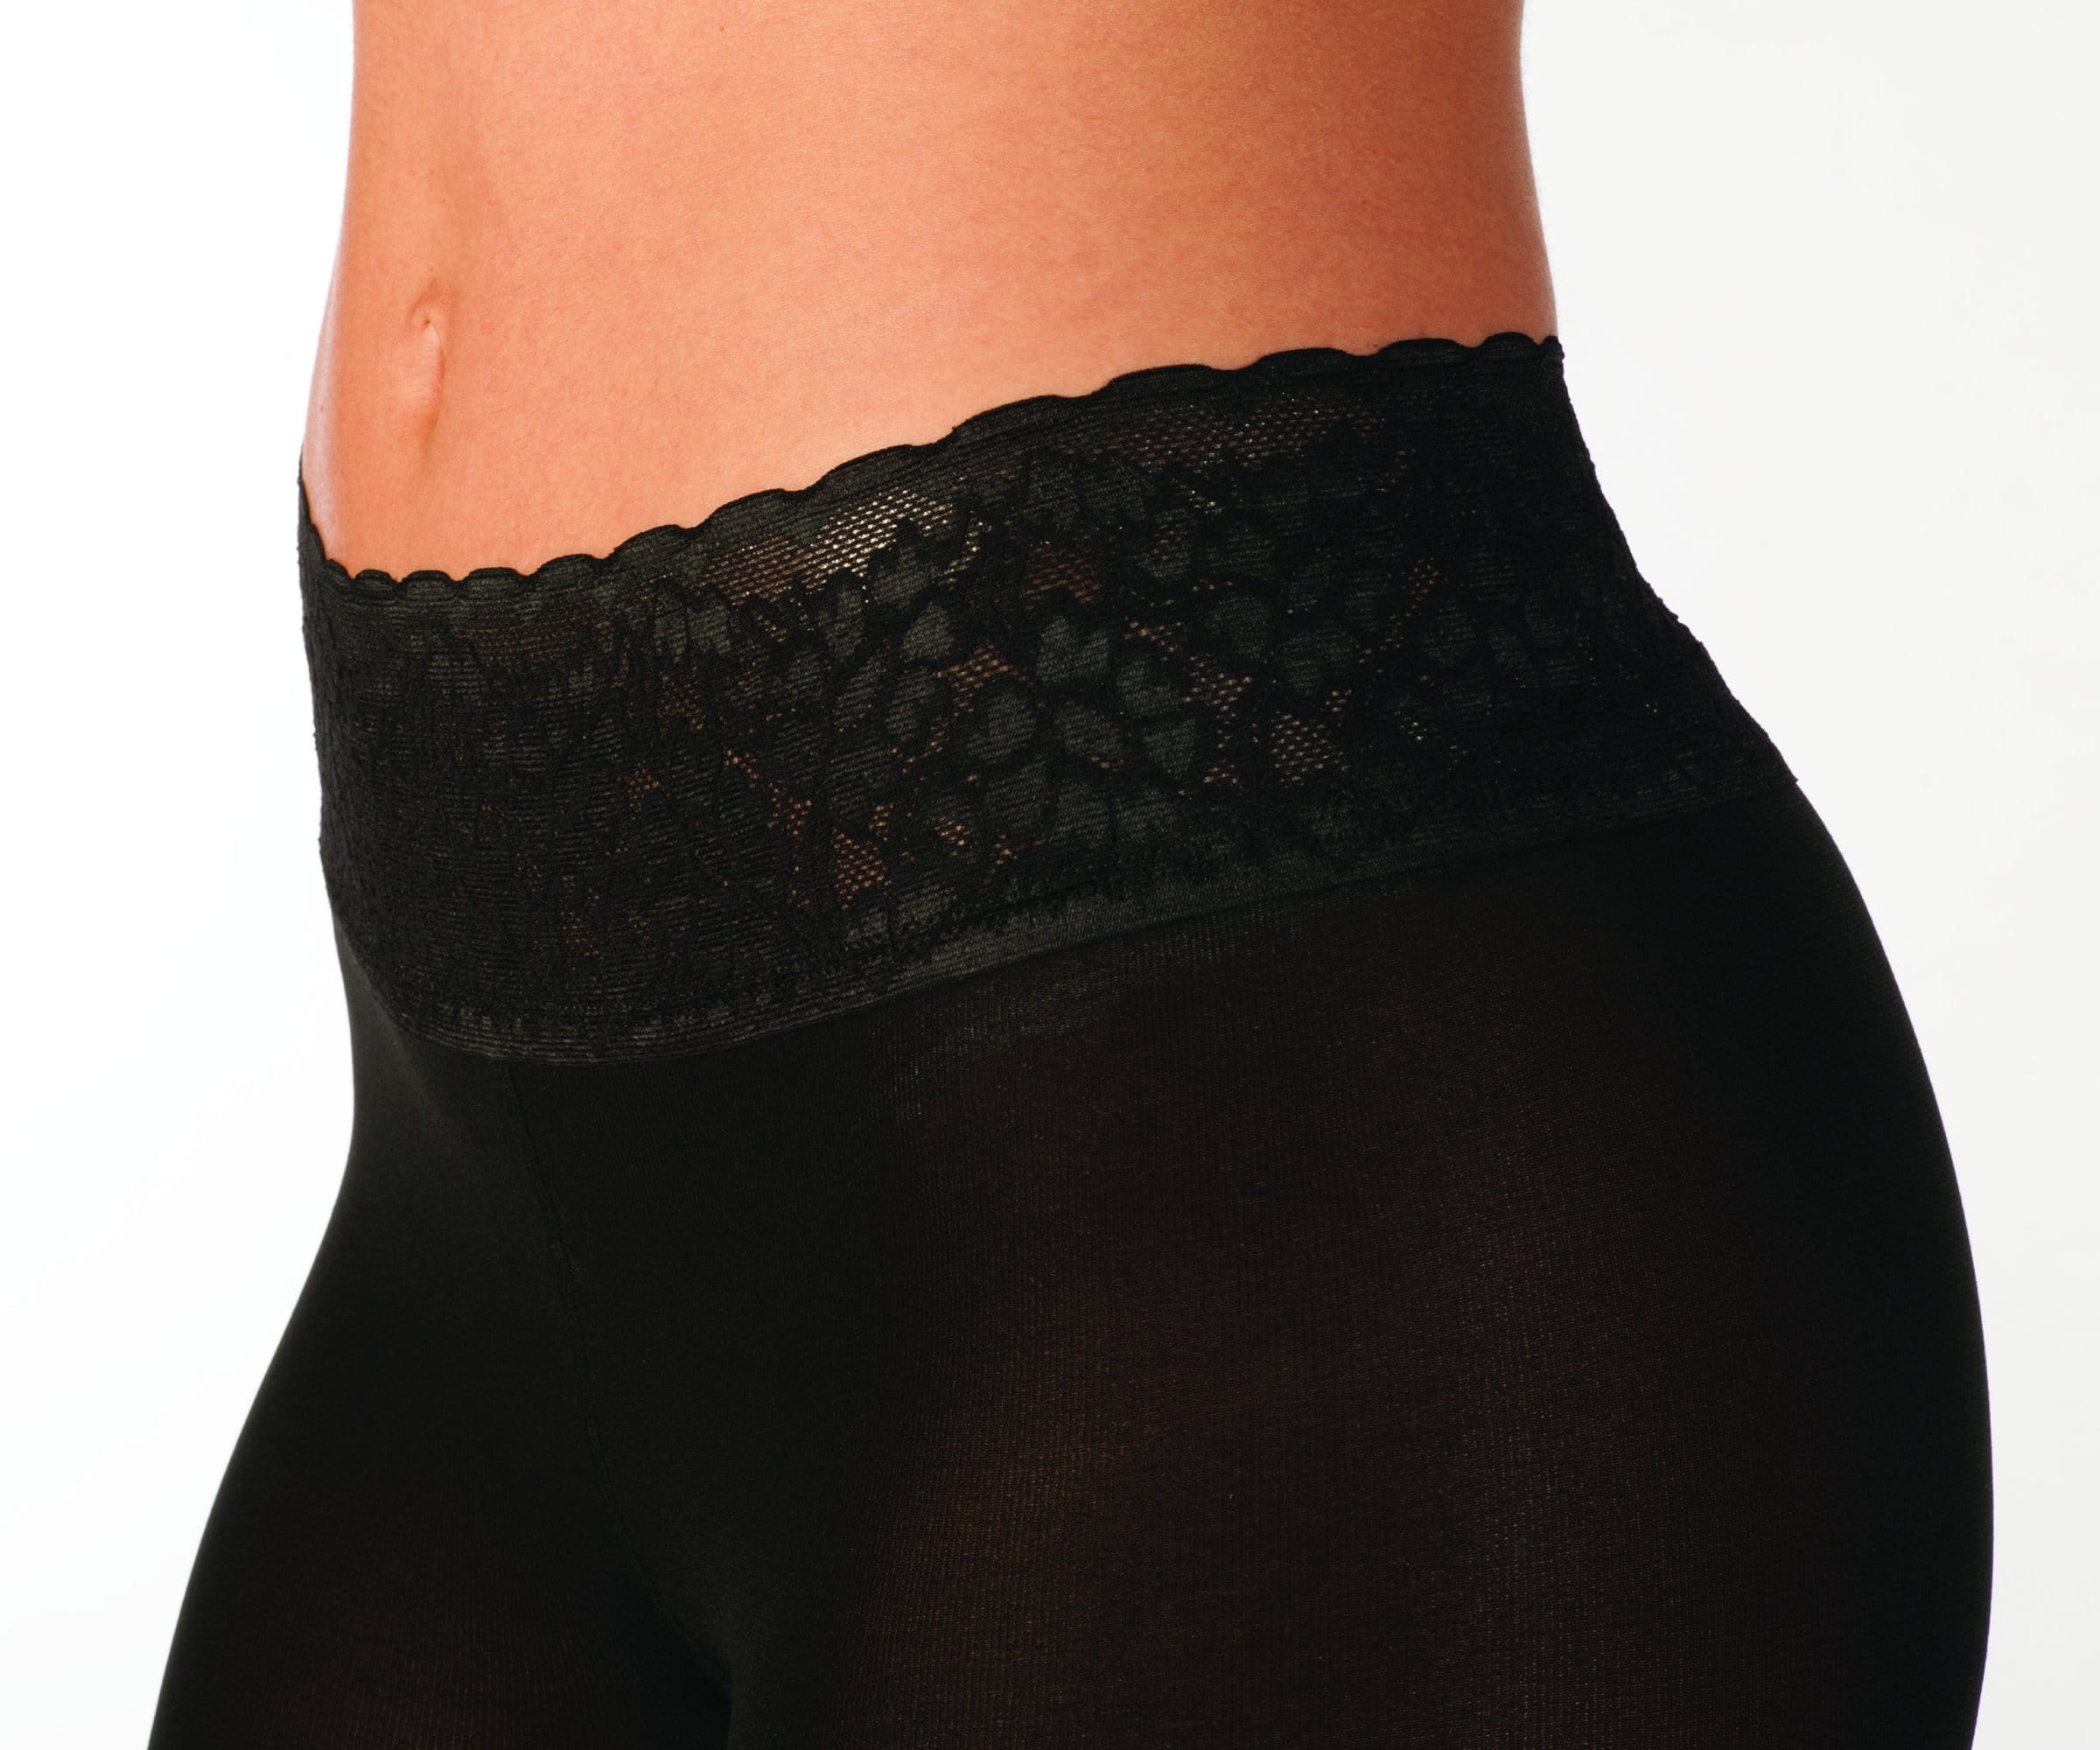 Close-up of Hipstik Comfort Lace Band on Black Sheer Pantyhose